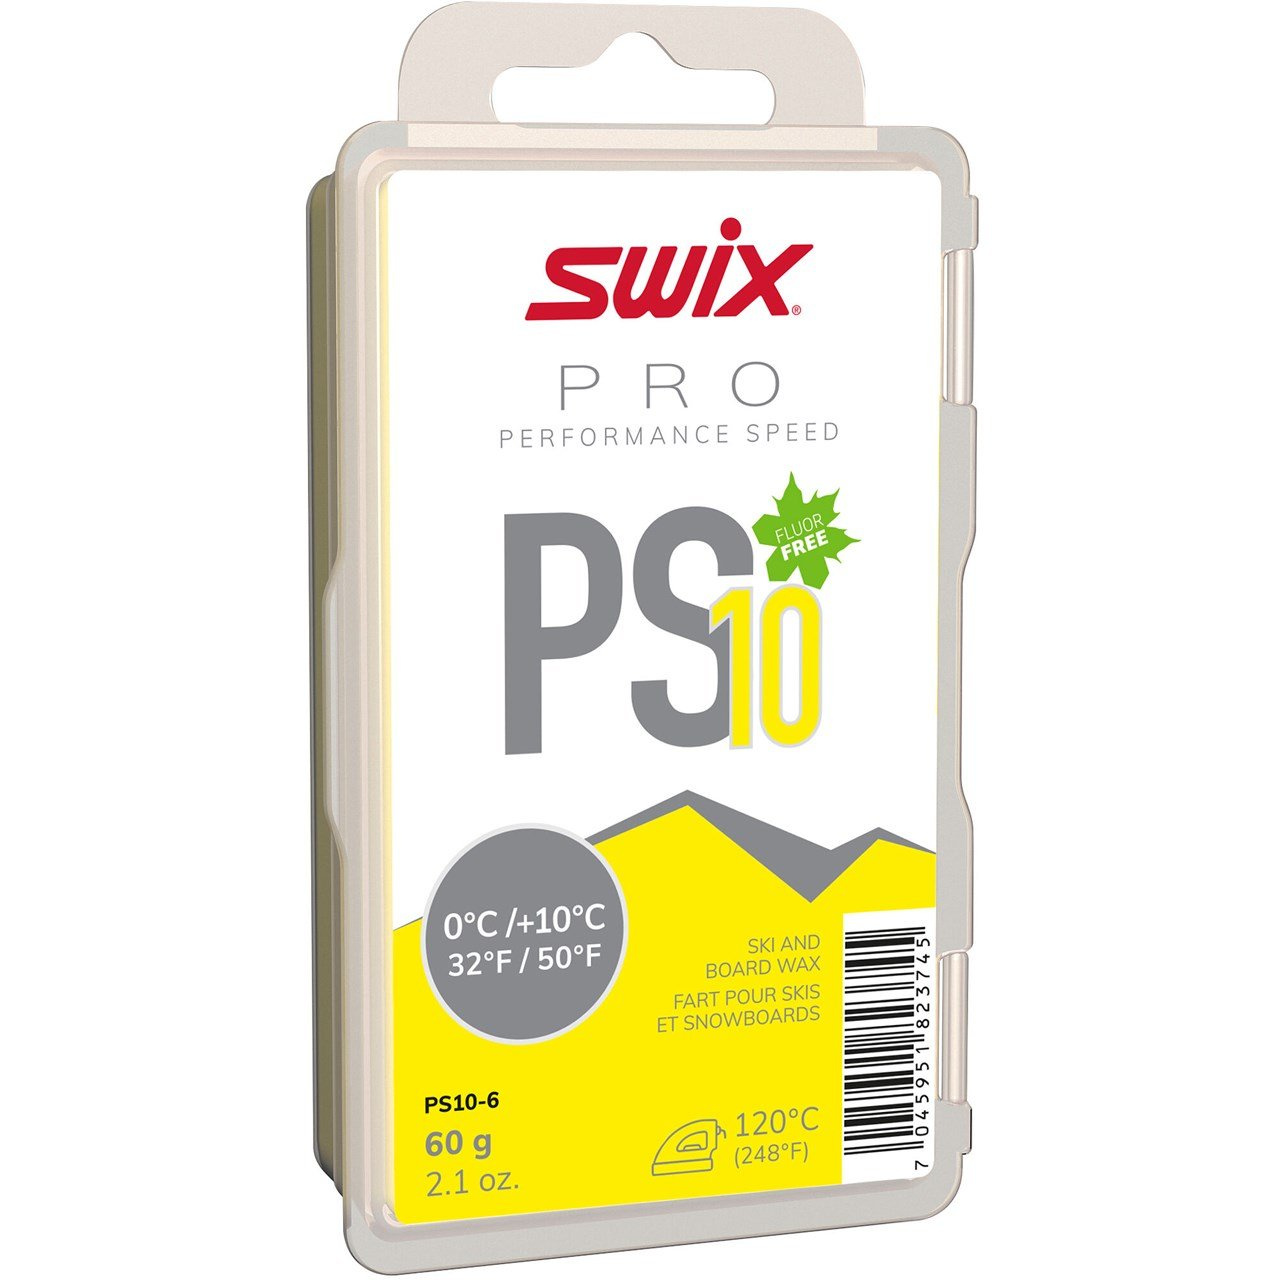 Swix Pure Speed PS10-6 (0/+10°C) 60g